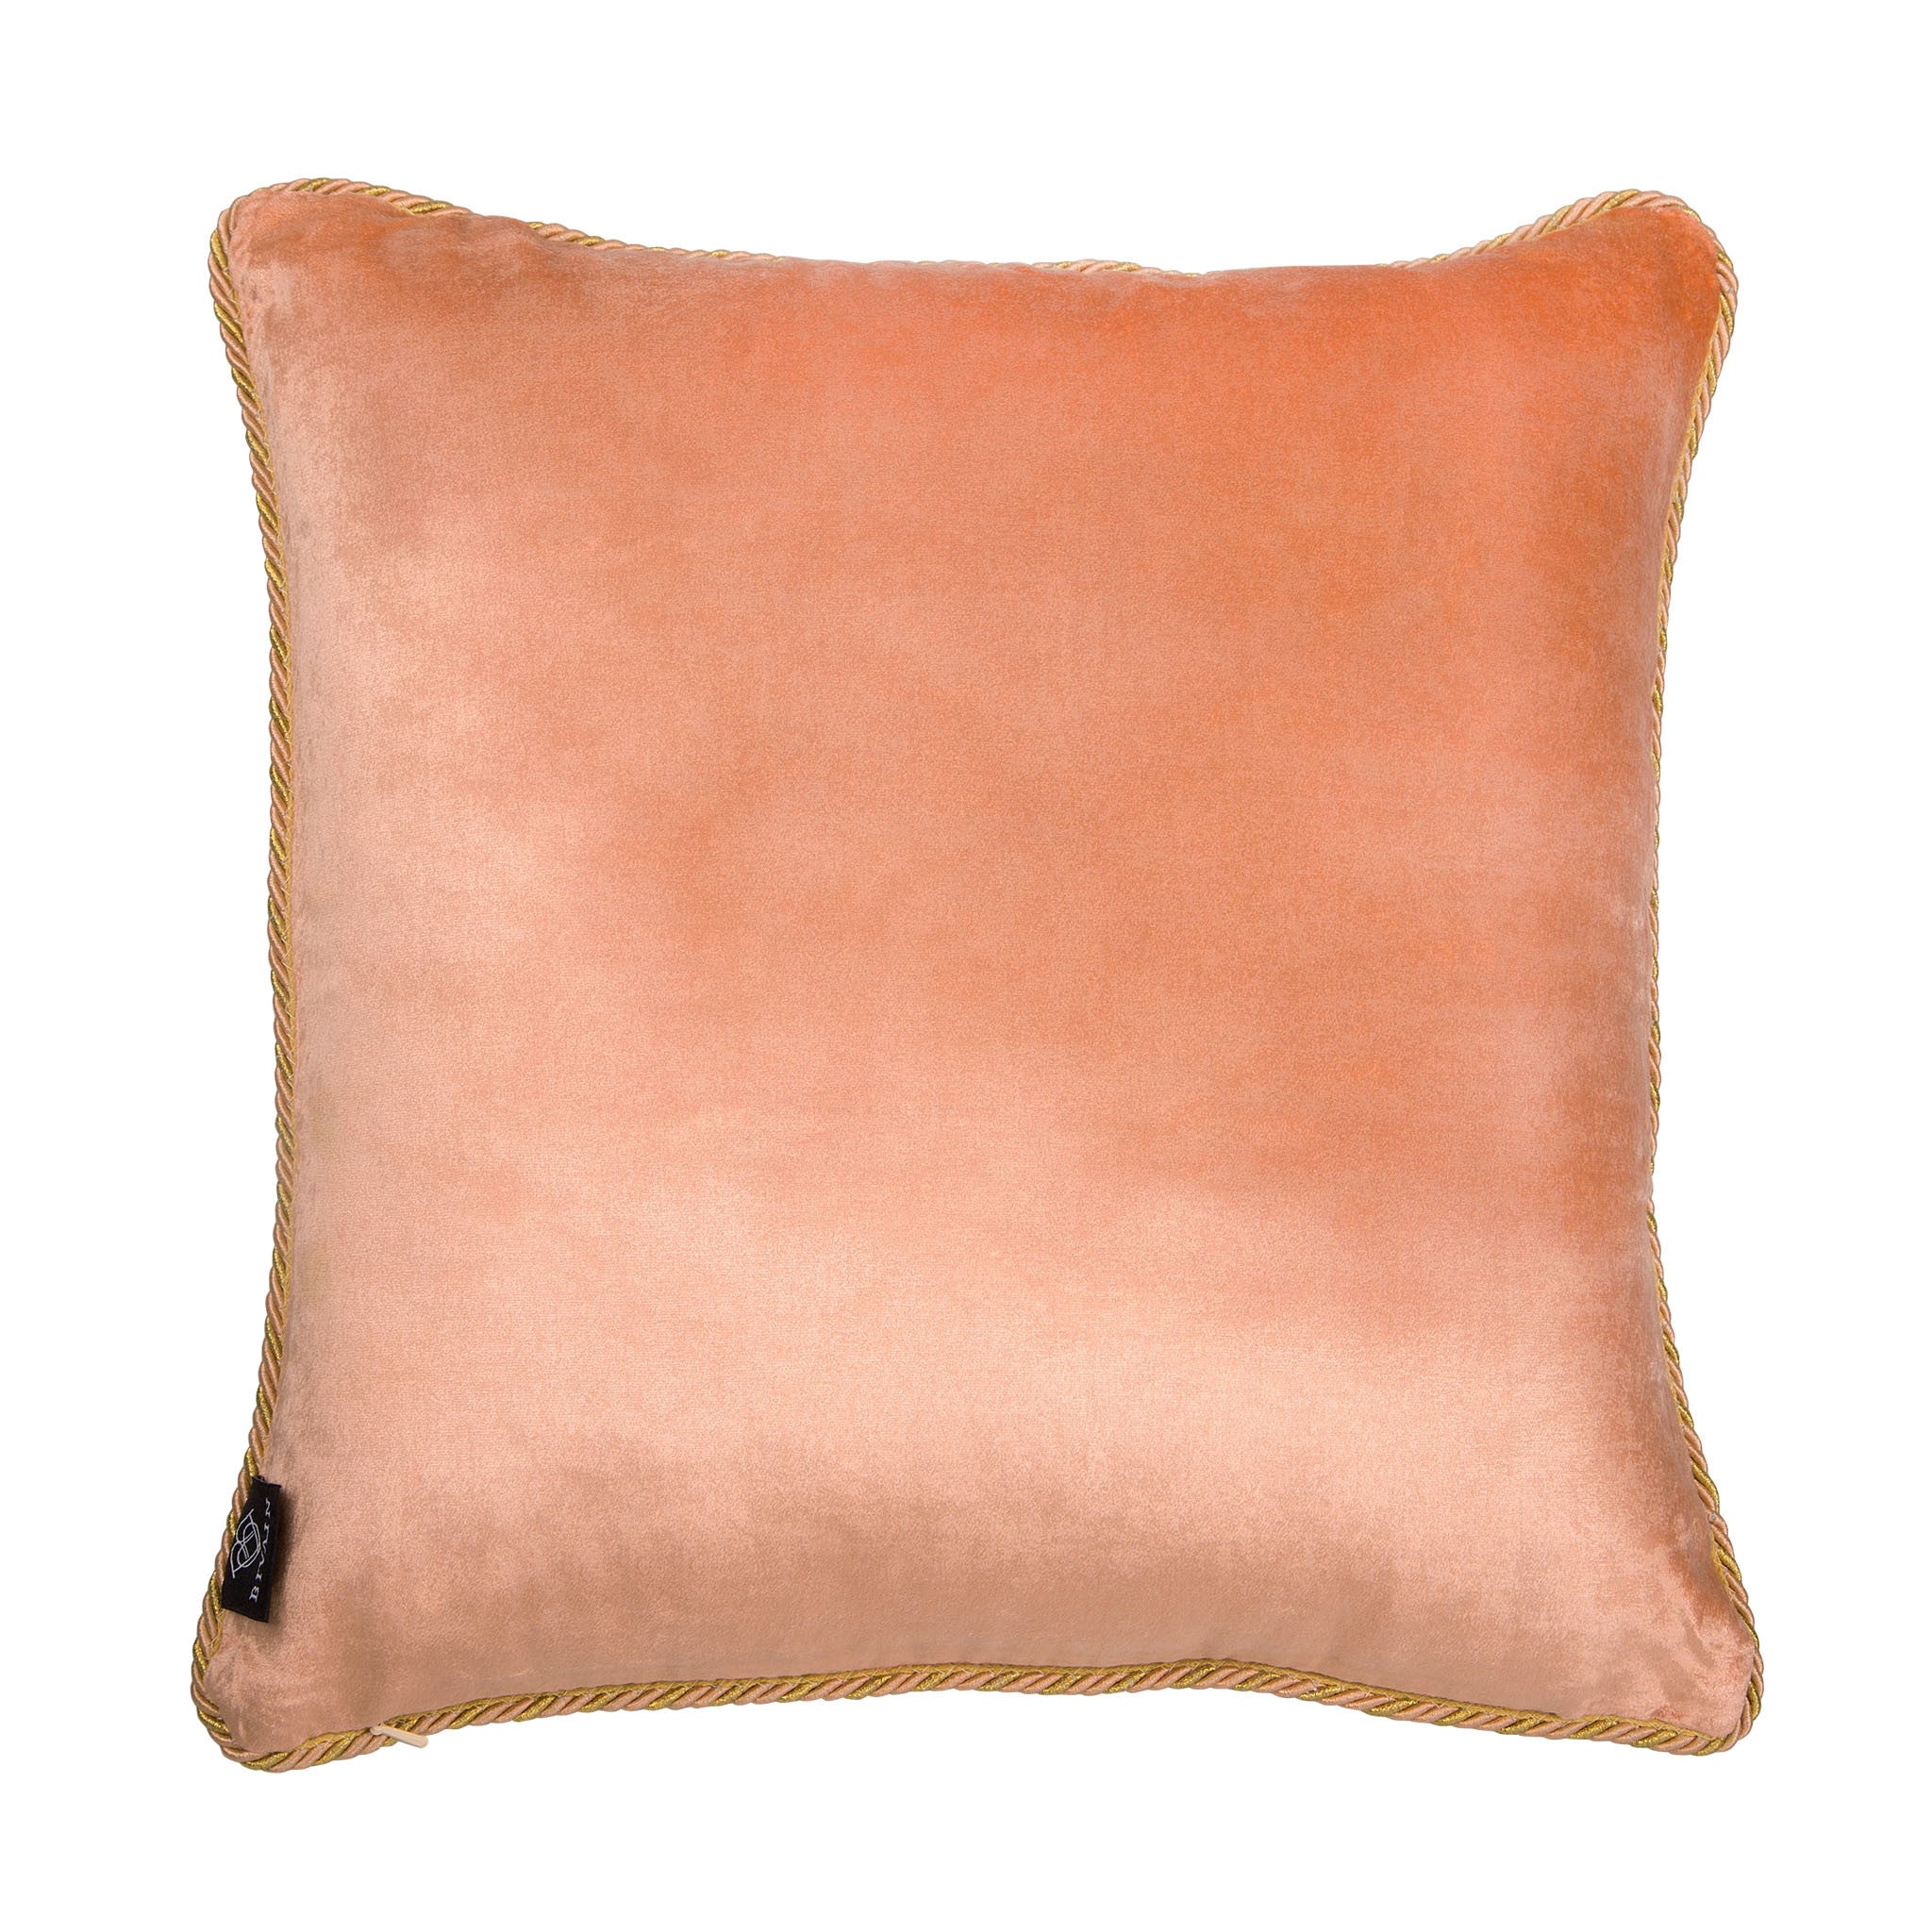 Silk twill and velvet Indian elephant print cushion - Bivain - 3